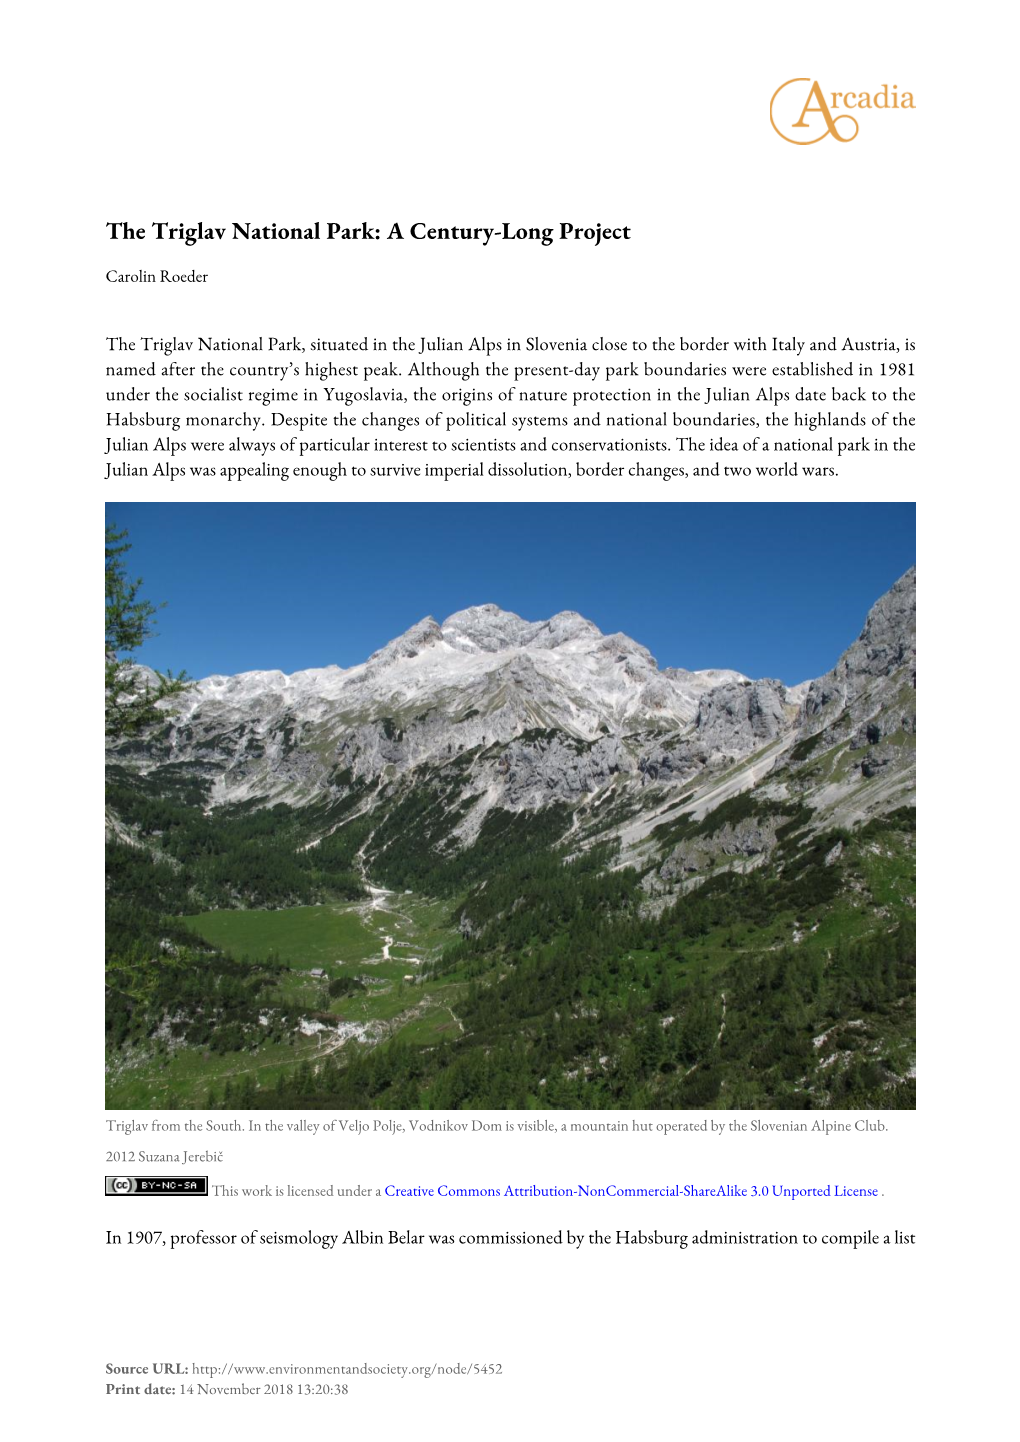 The Triglav National Park: a Century-Long Project